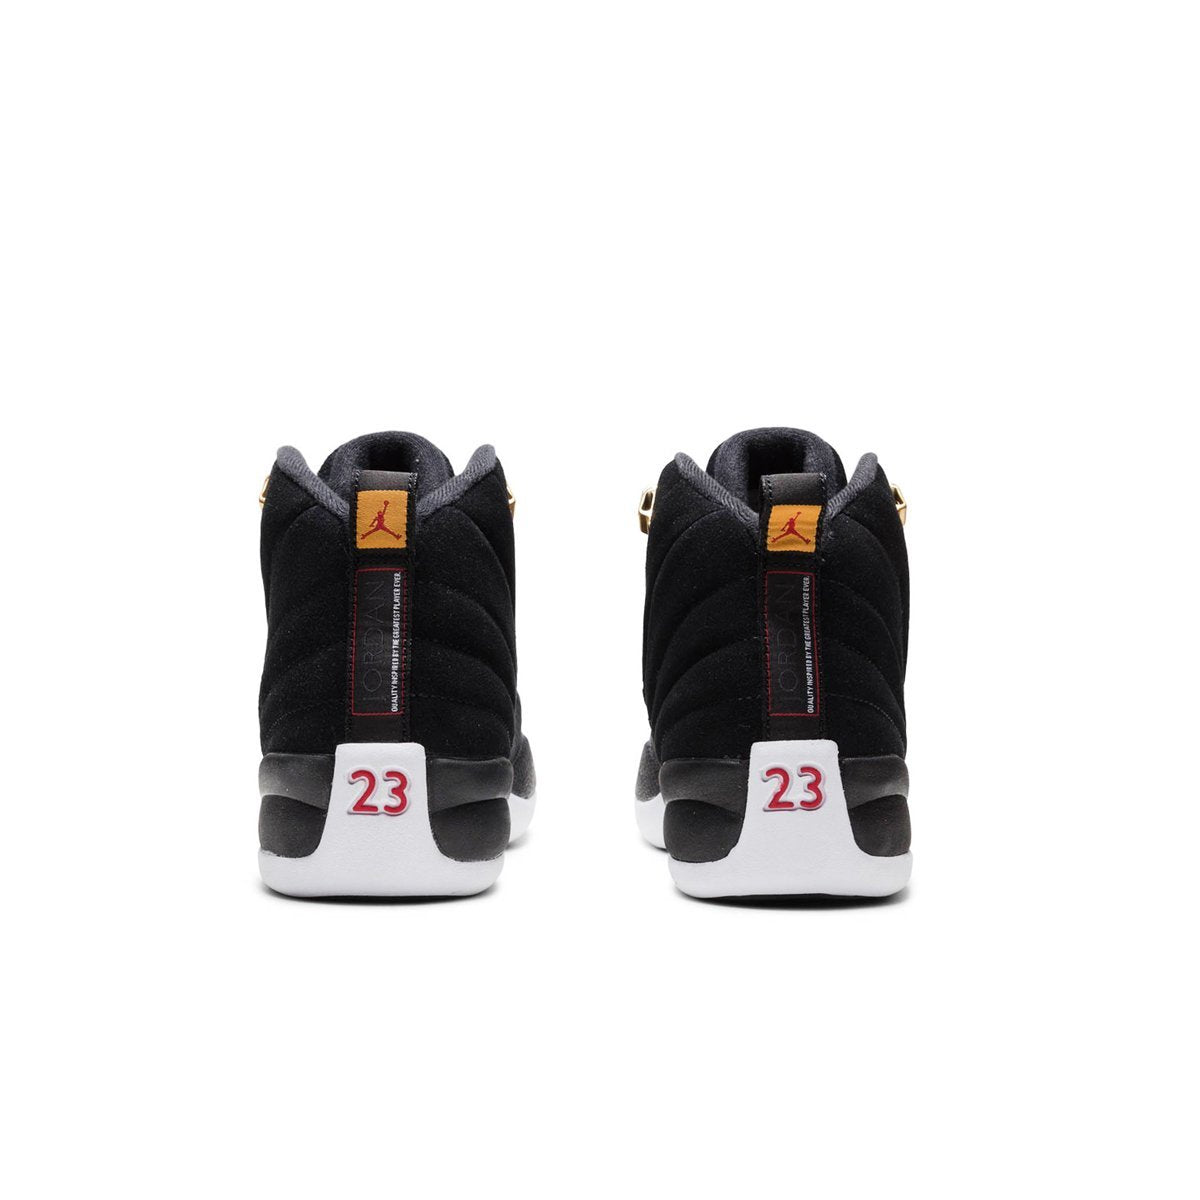 jordan shoes 23 on back